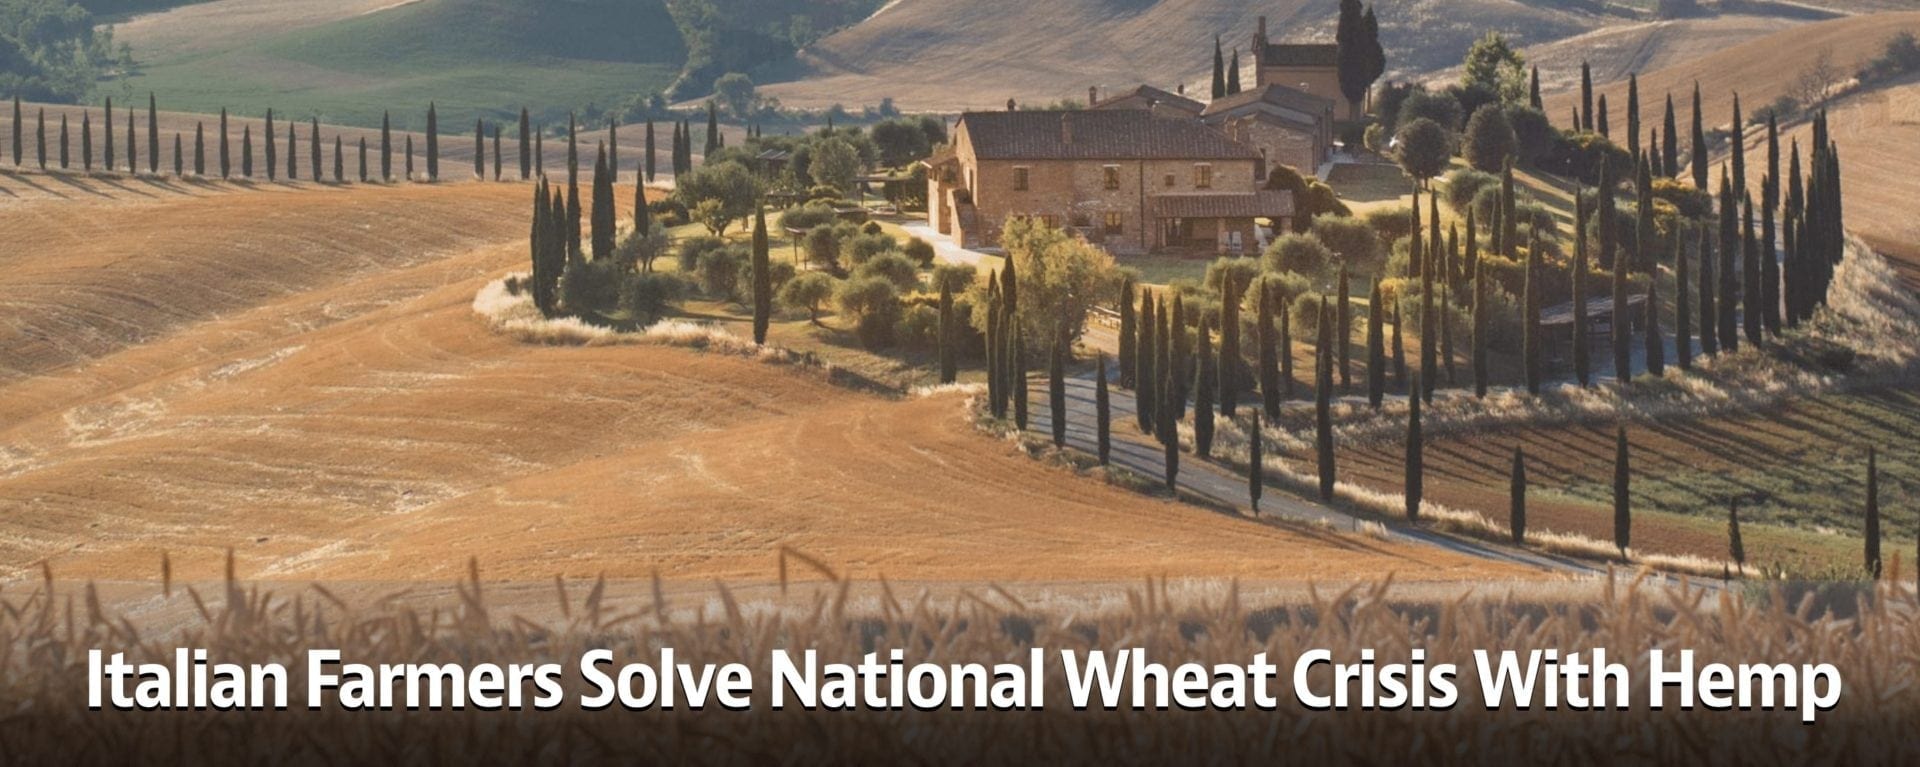 Italian Farmers Solve National Wheat Crisis With Hemp